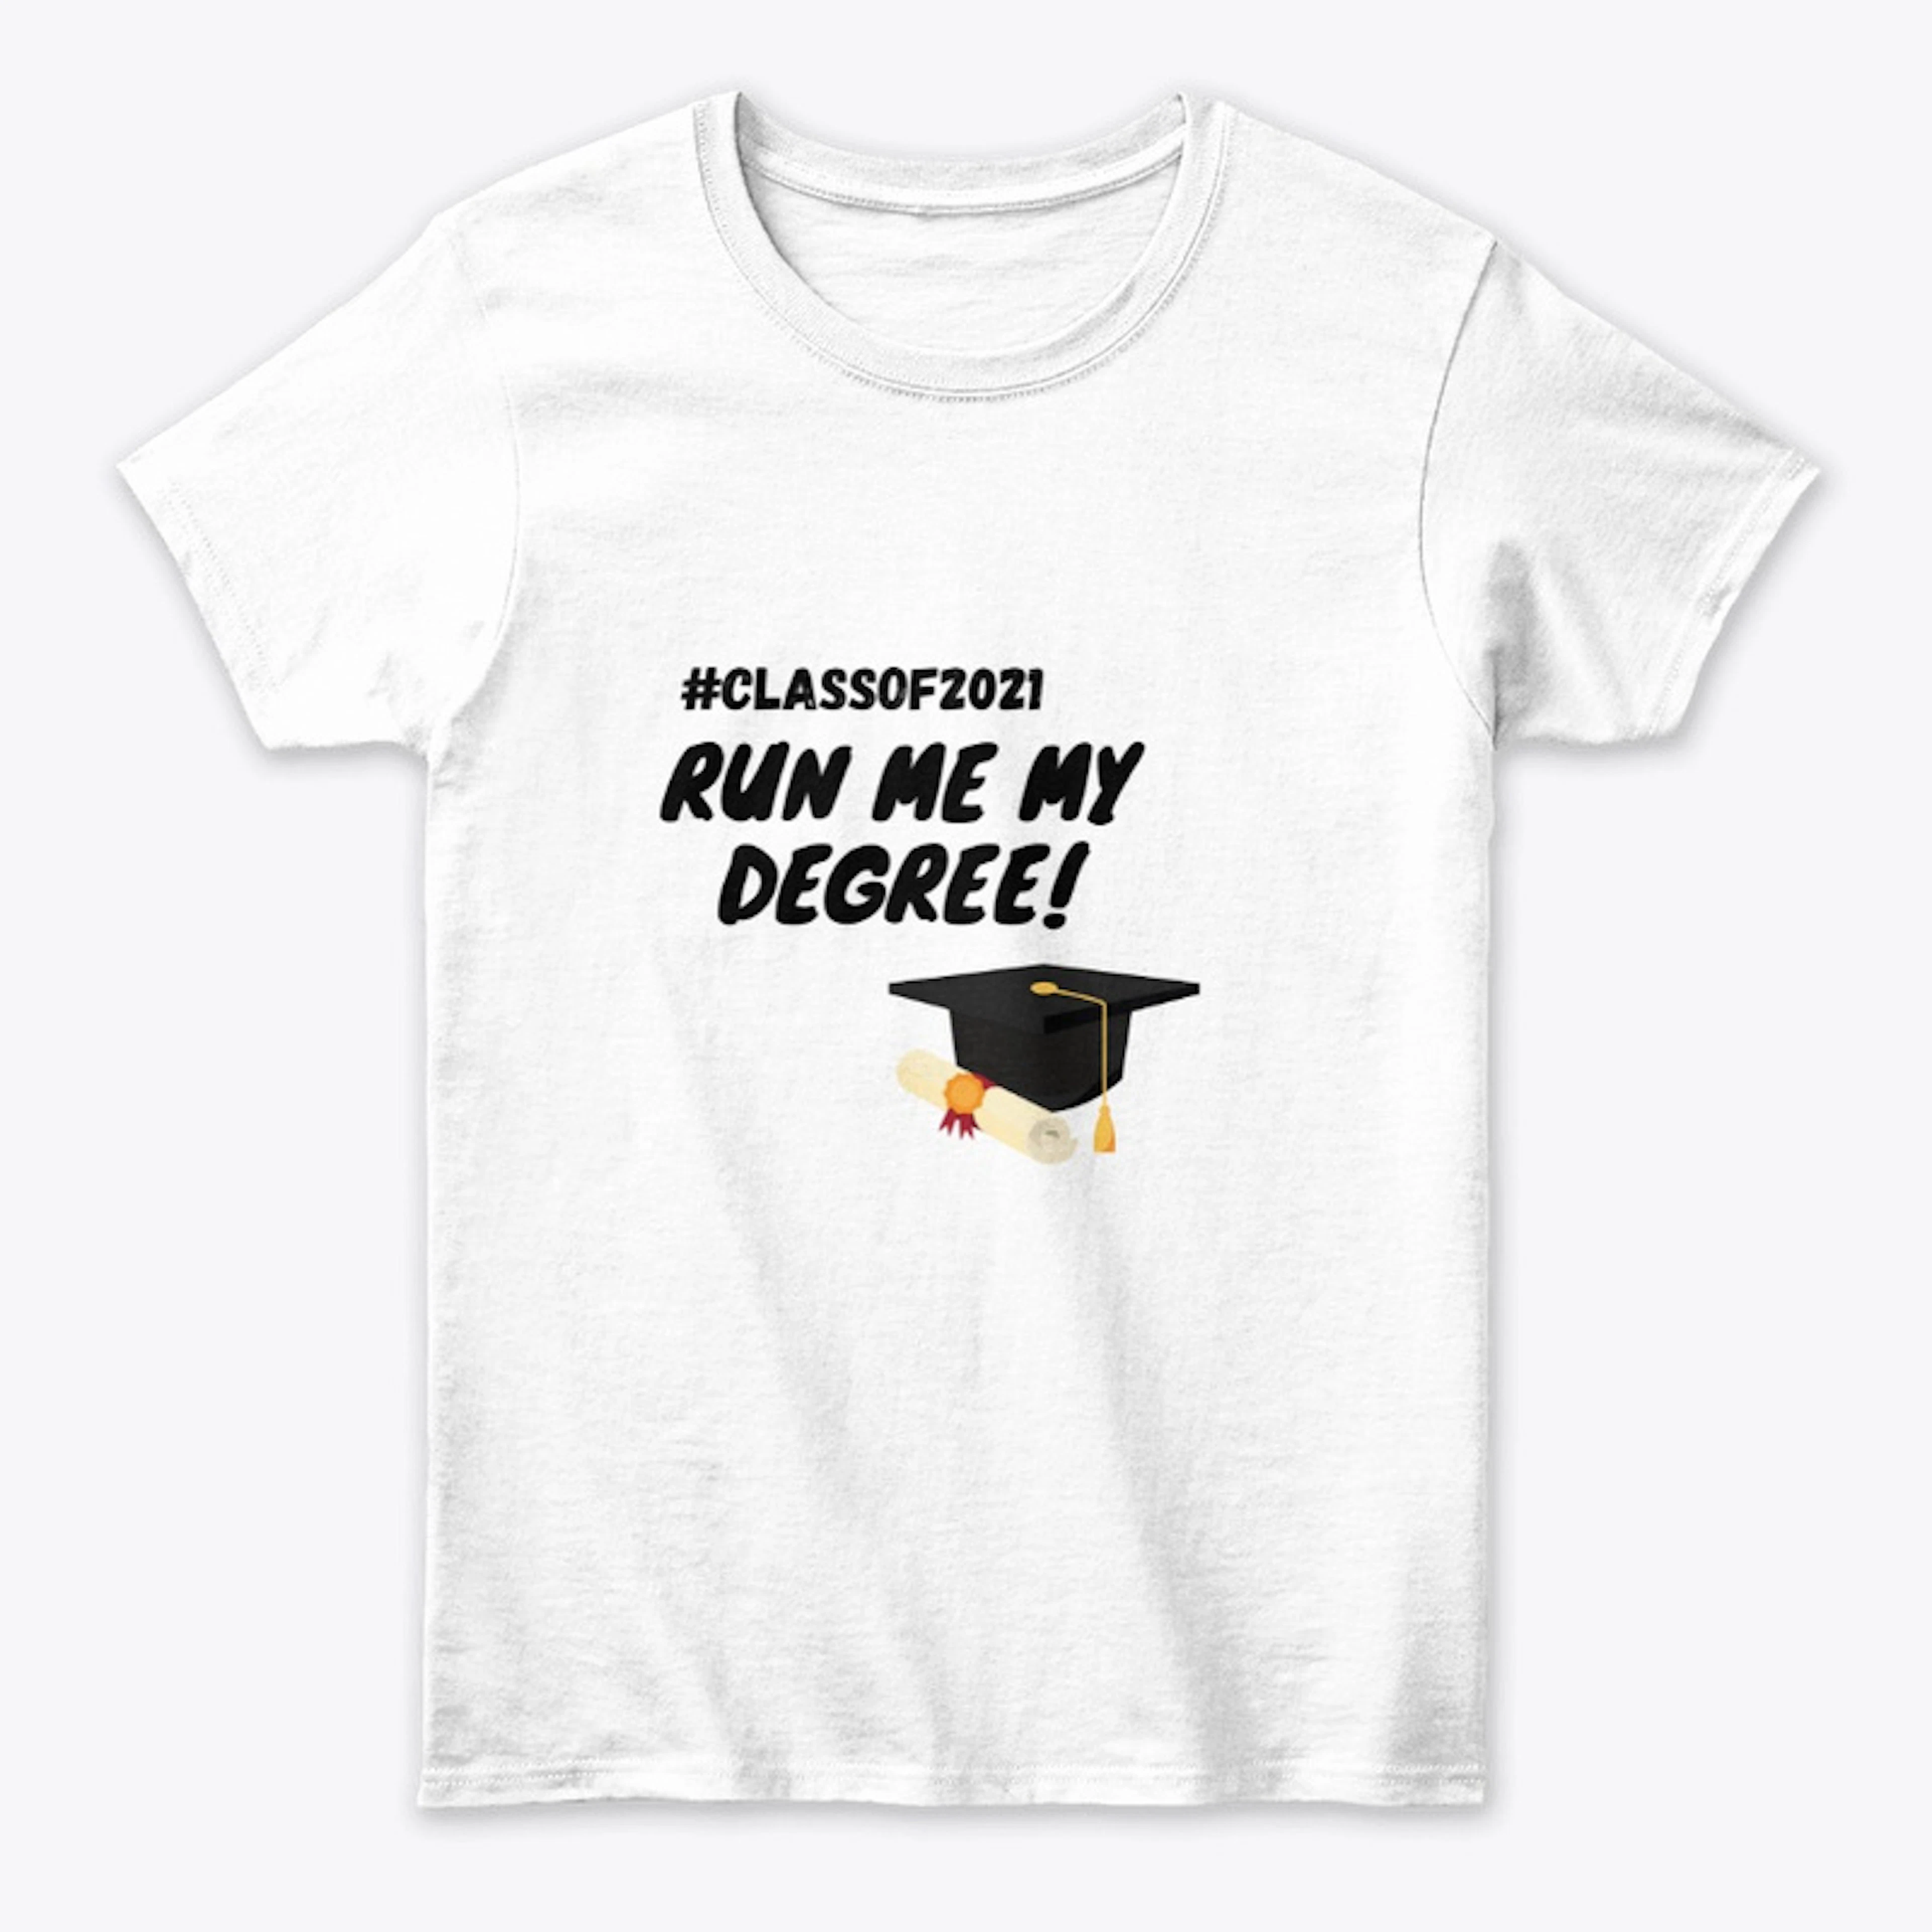 Run me my degree Graduation T-shirt 